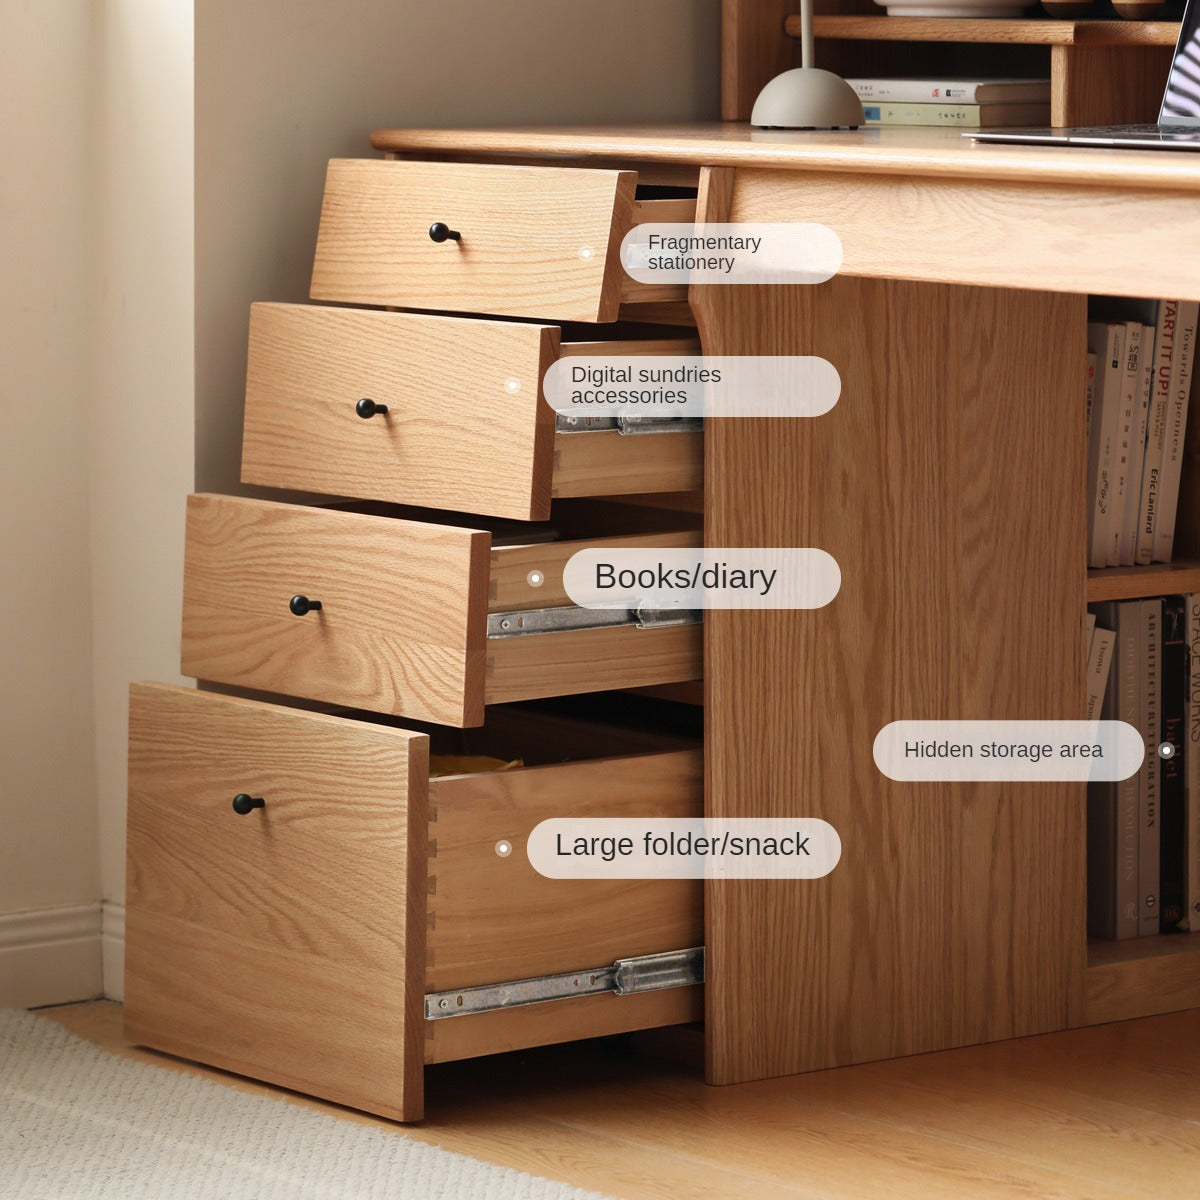 Oak solid wood desk bookshelf integrated Warm light-